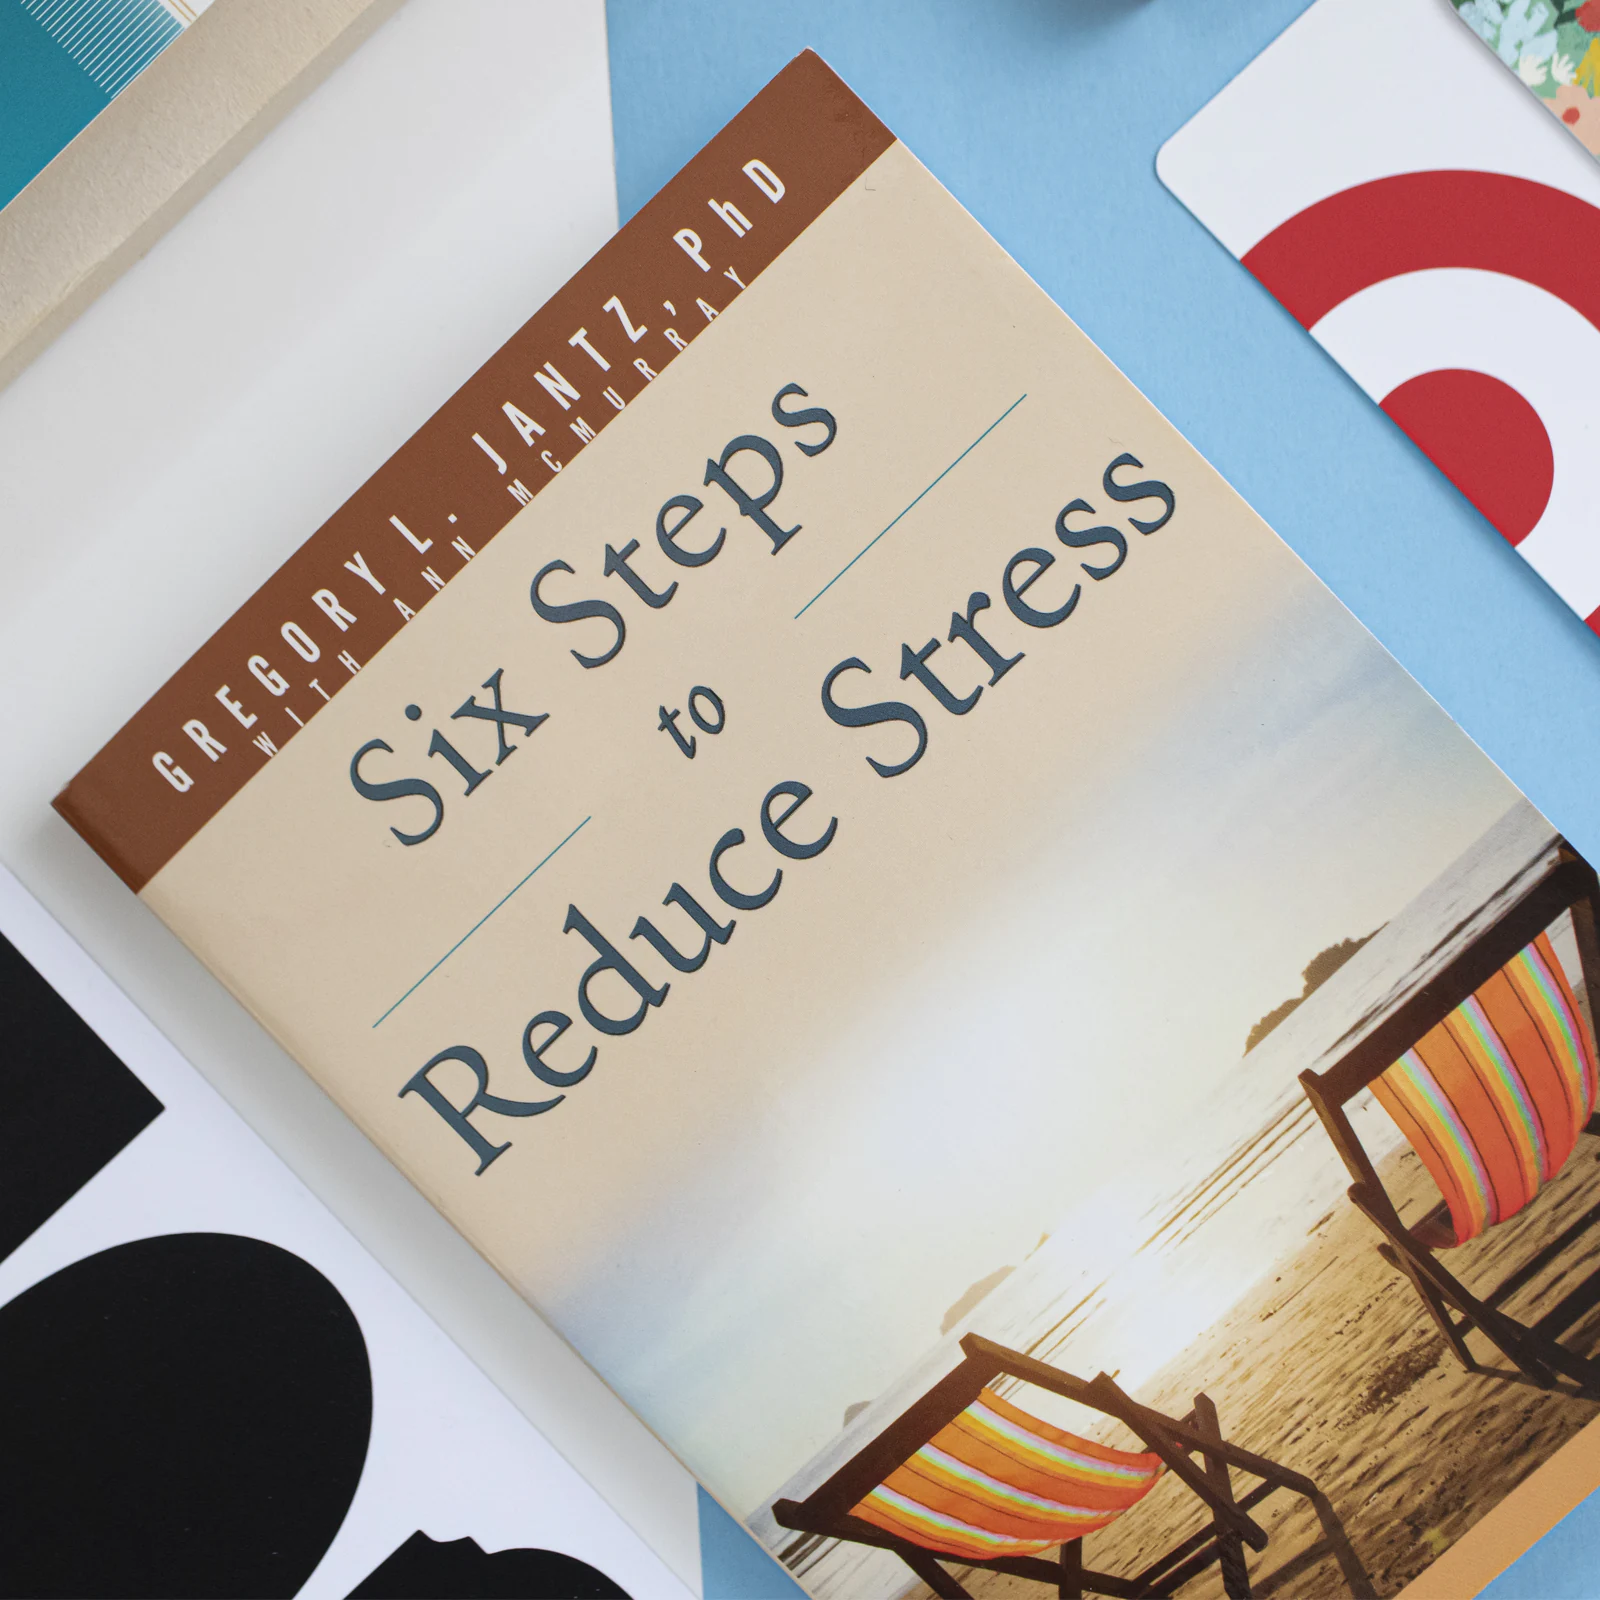 Six Steps to Reduce Stress